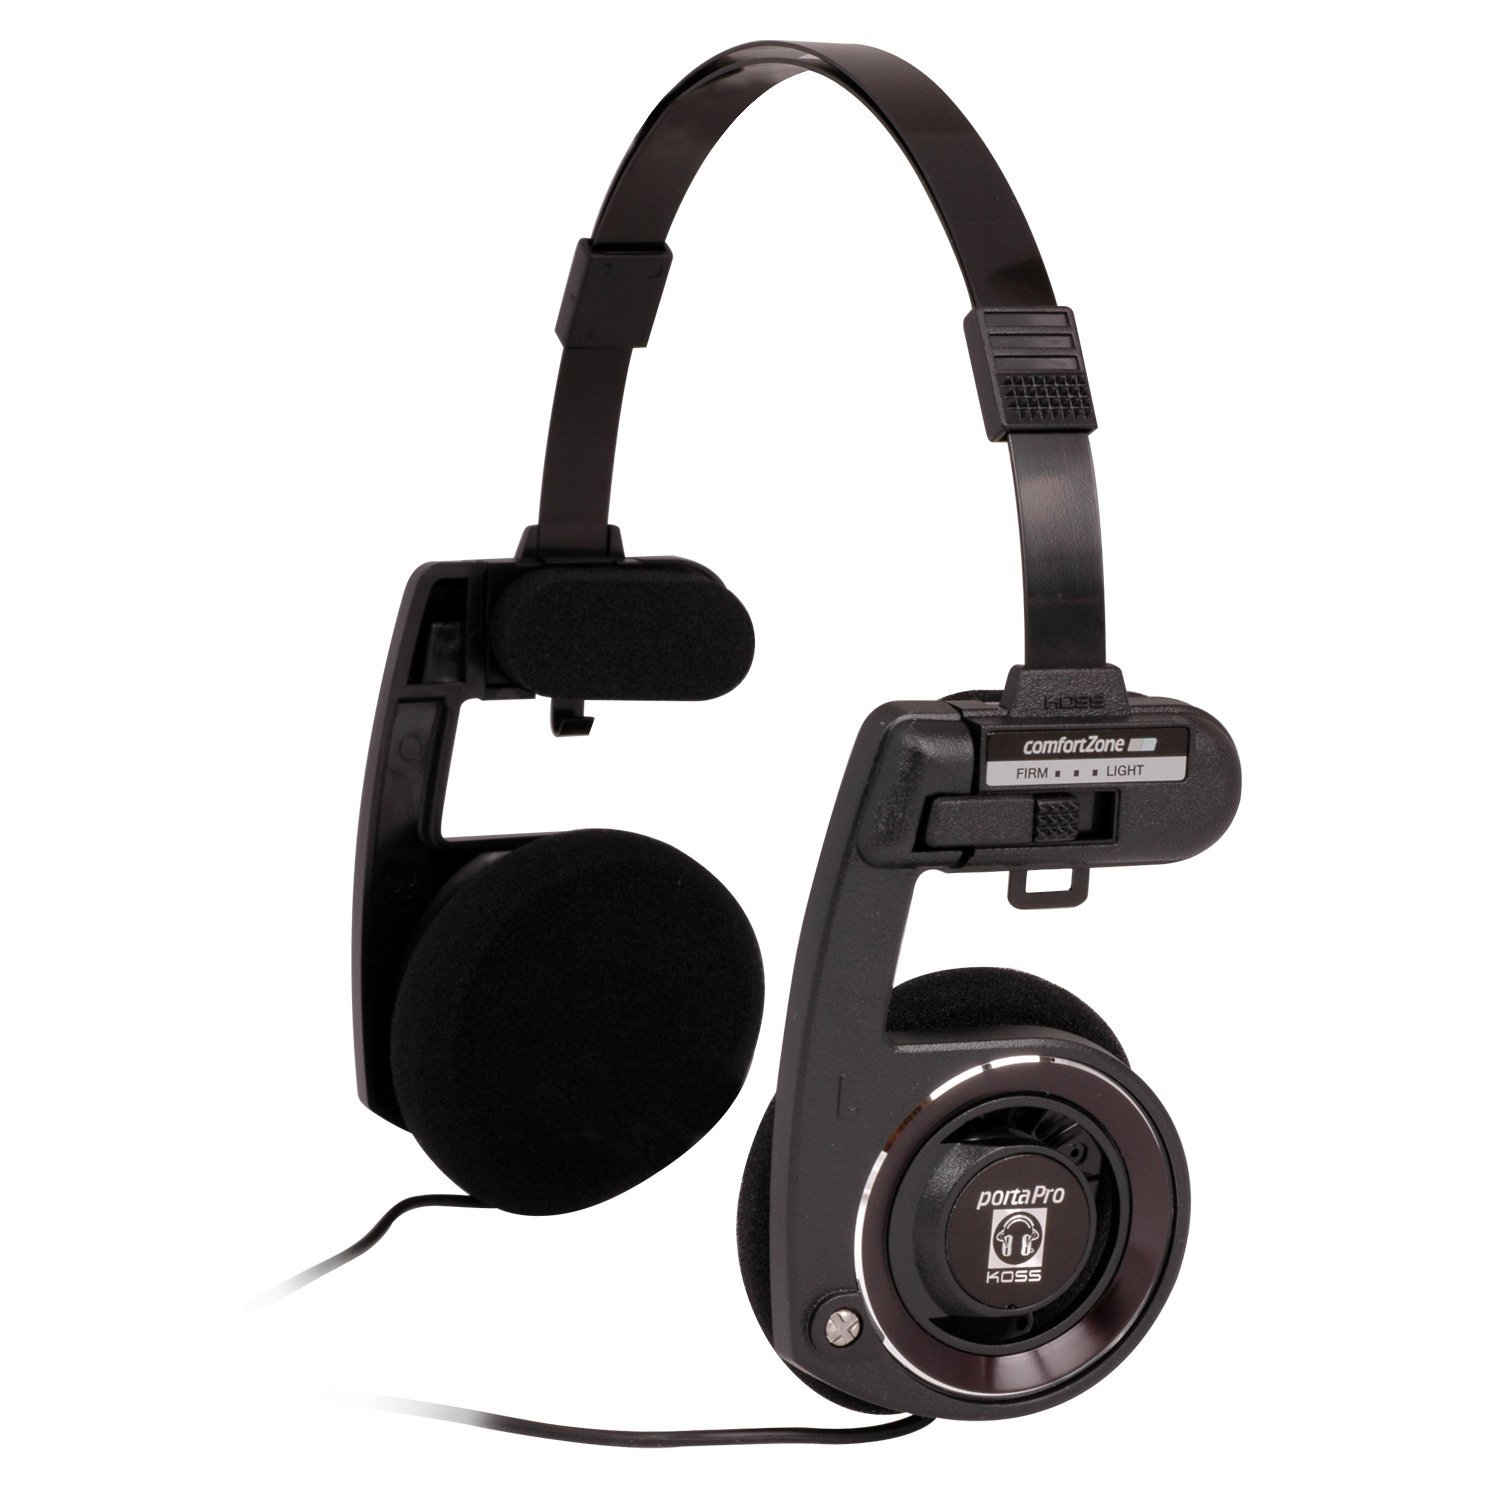 Koss Porta Pro On-Ear Stereo Headphones - Black